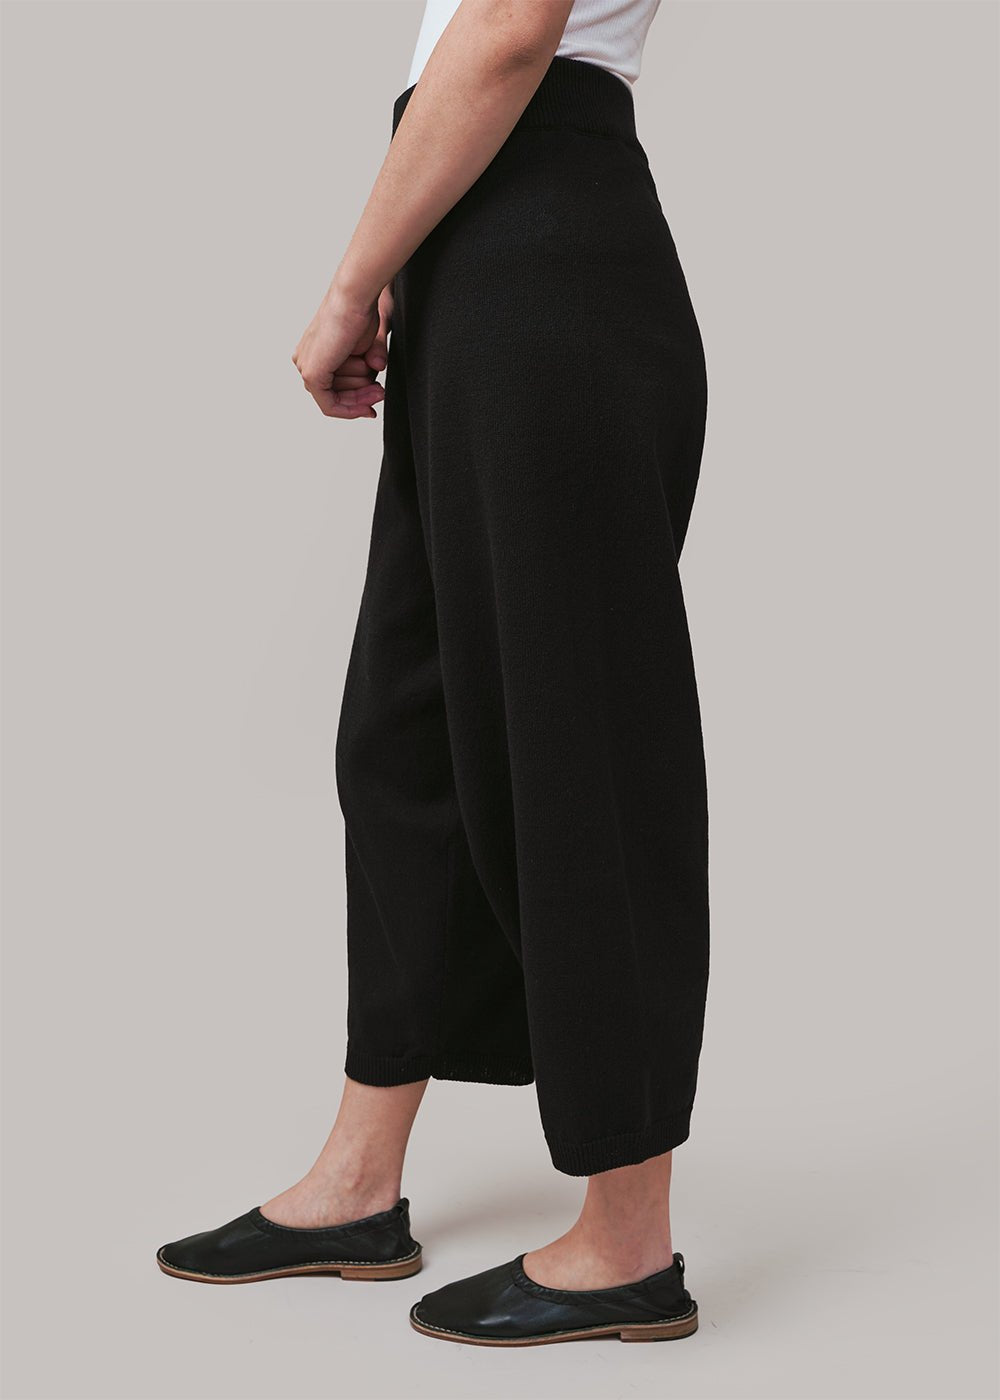 1) Basic Editions 2X Women's 100% Cotton EGP Knit Pants Elastic Waist Black  New on eBid United States